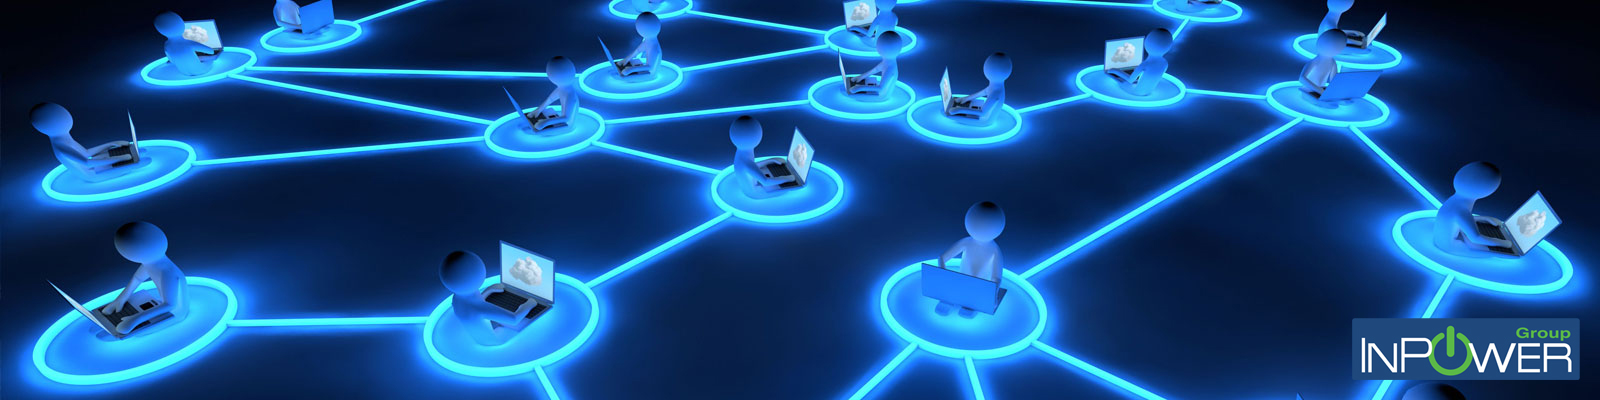 Progettazione infrastrutture ICT INPOWER-GROUP Networking reti wireless e telefonia IP  struttura Illuminotecnica cablaggi tecnologie Illuminotecnica 